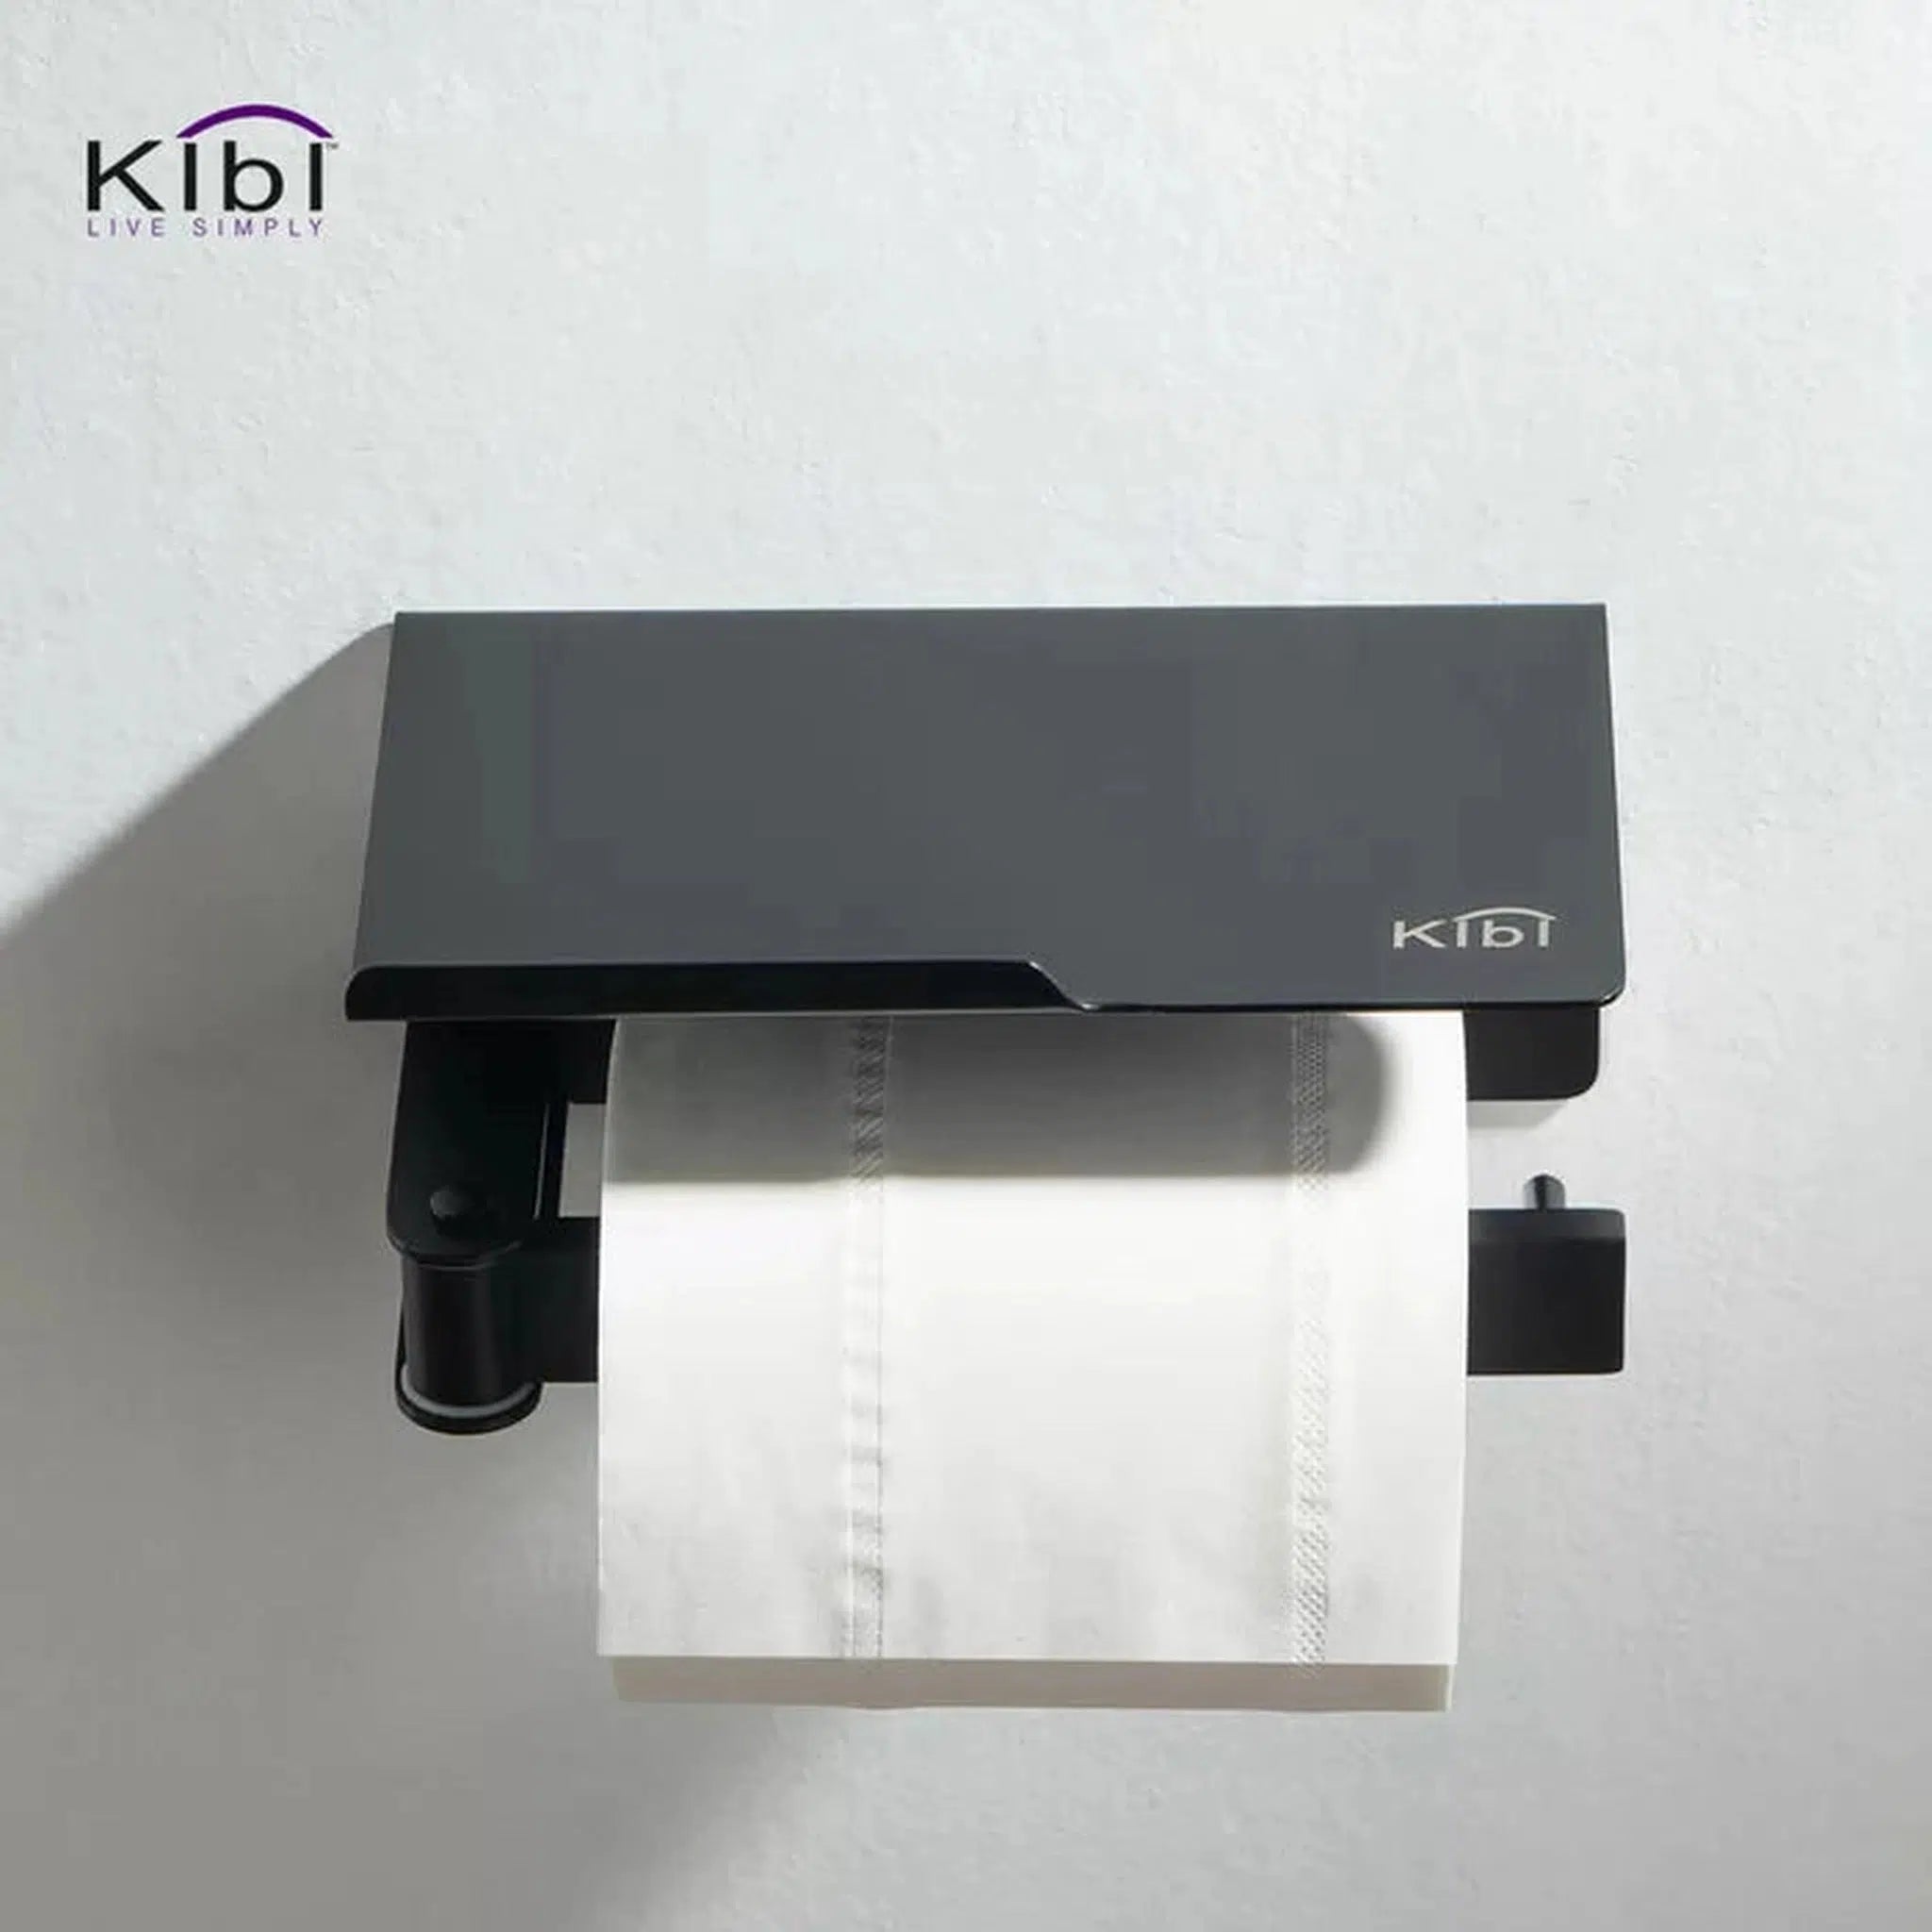 KIBI, KIBI Deco Bathroom Toilet Paper Holder With Platform in Matte Black Finish